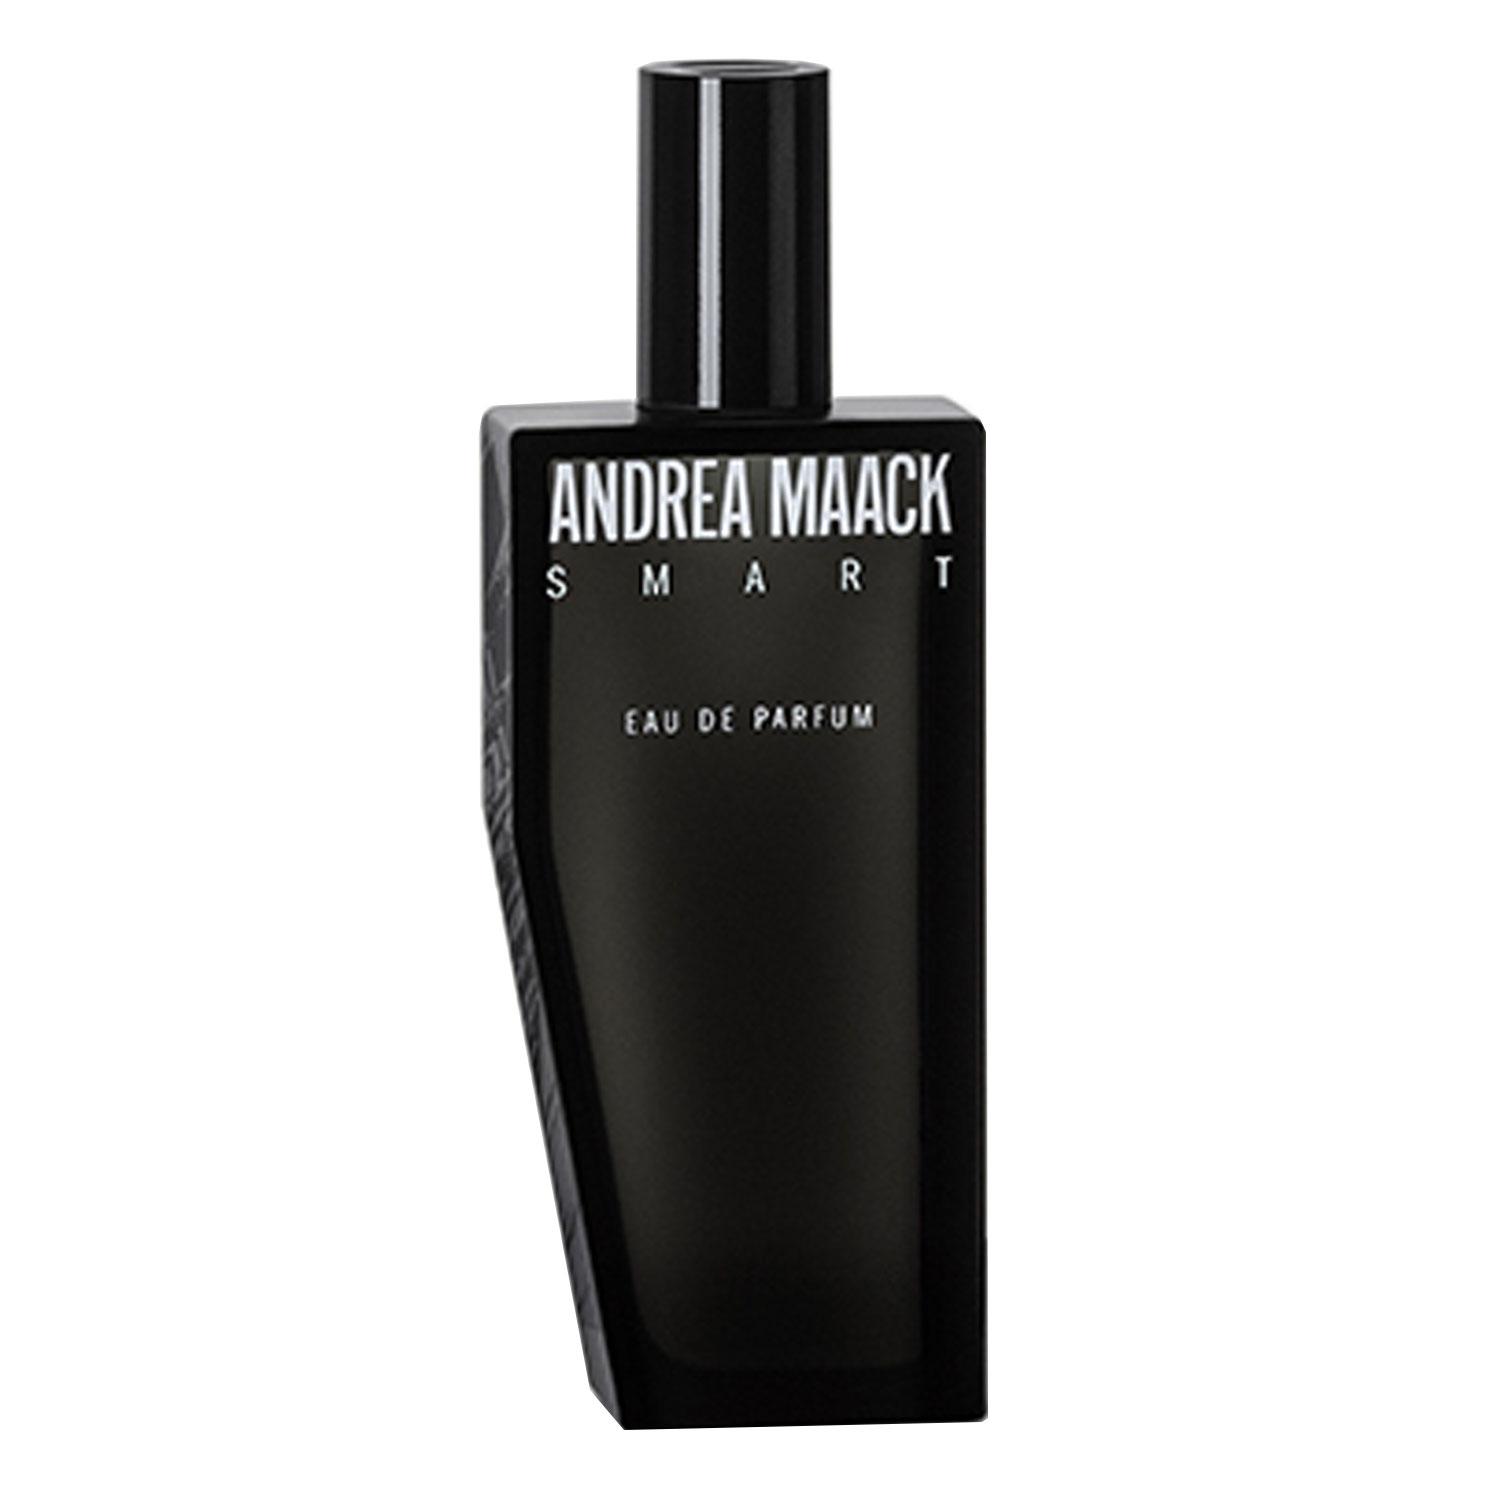 ANDREA MAACK - SMART Eau de Parfum